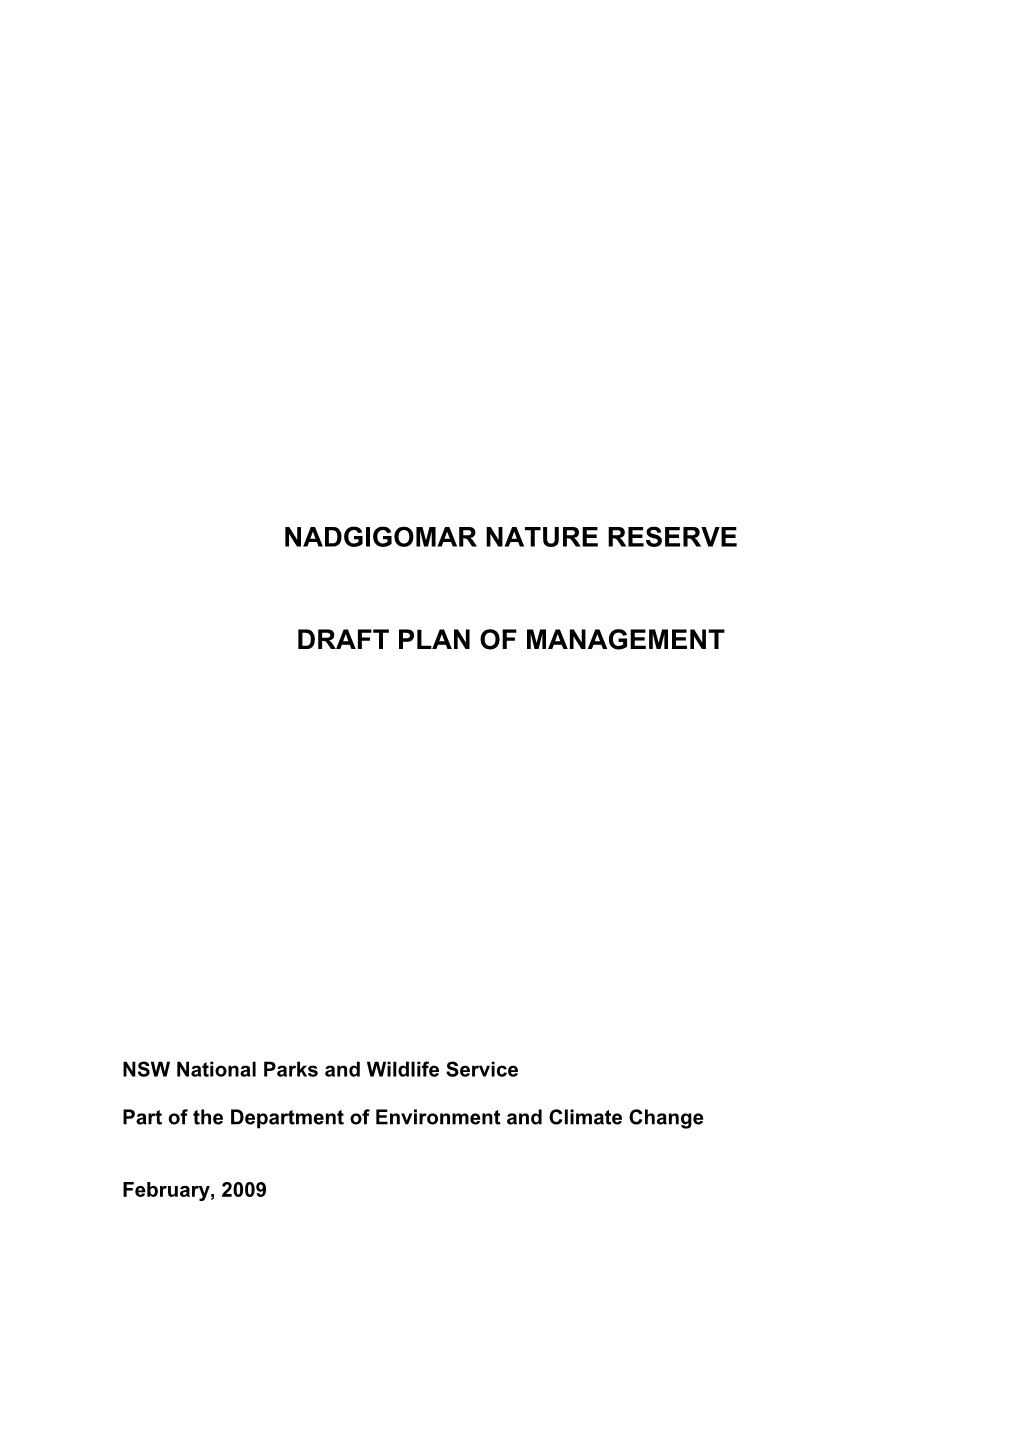 Nadgigomar Nature Reserve Draft Plan of Management